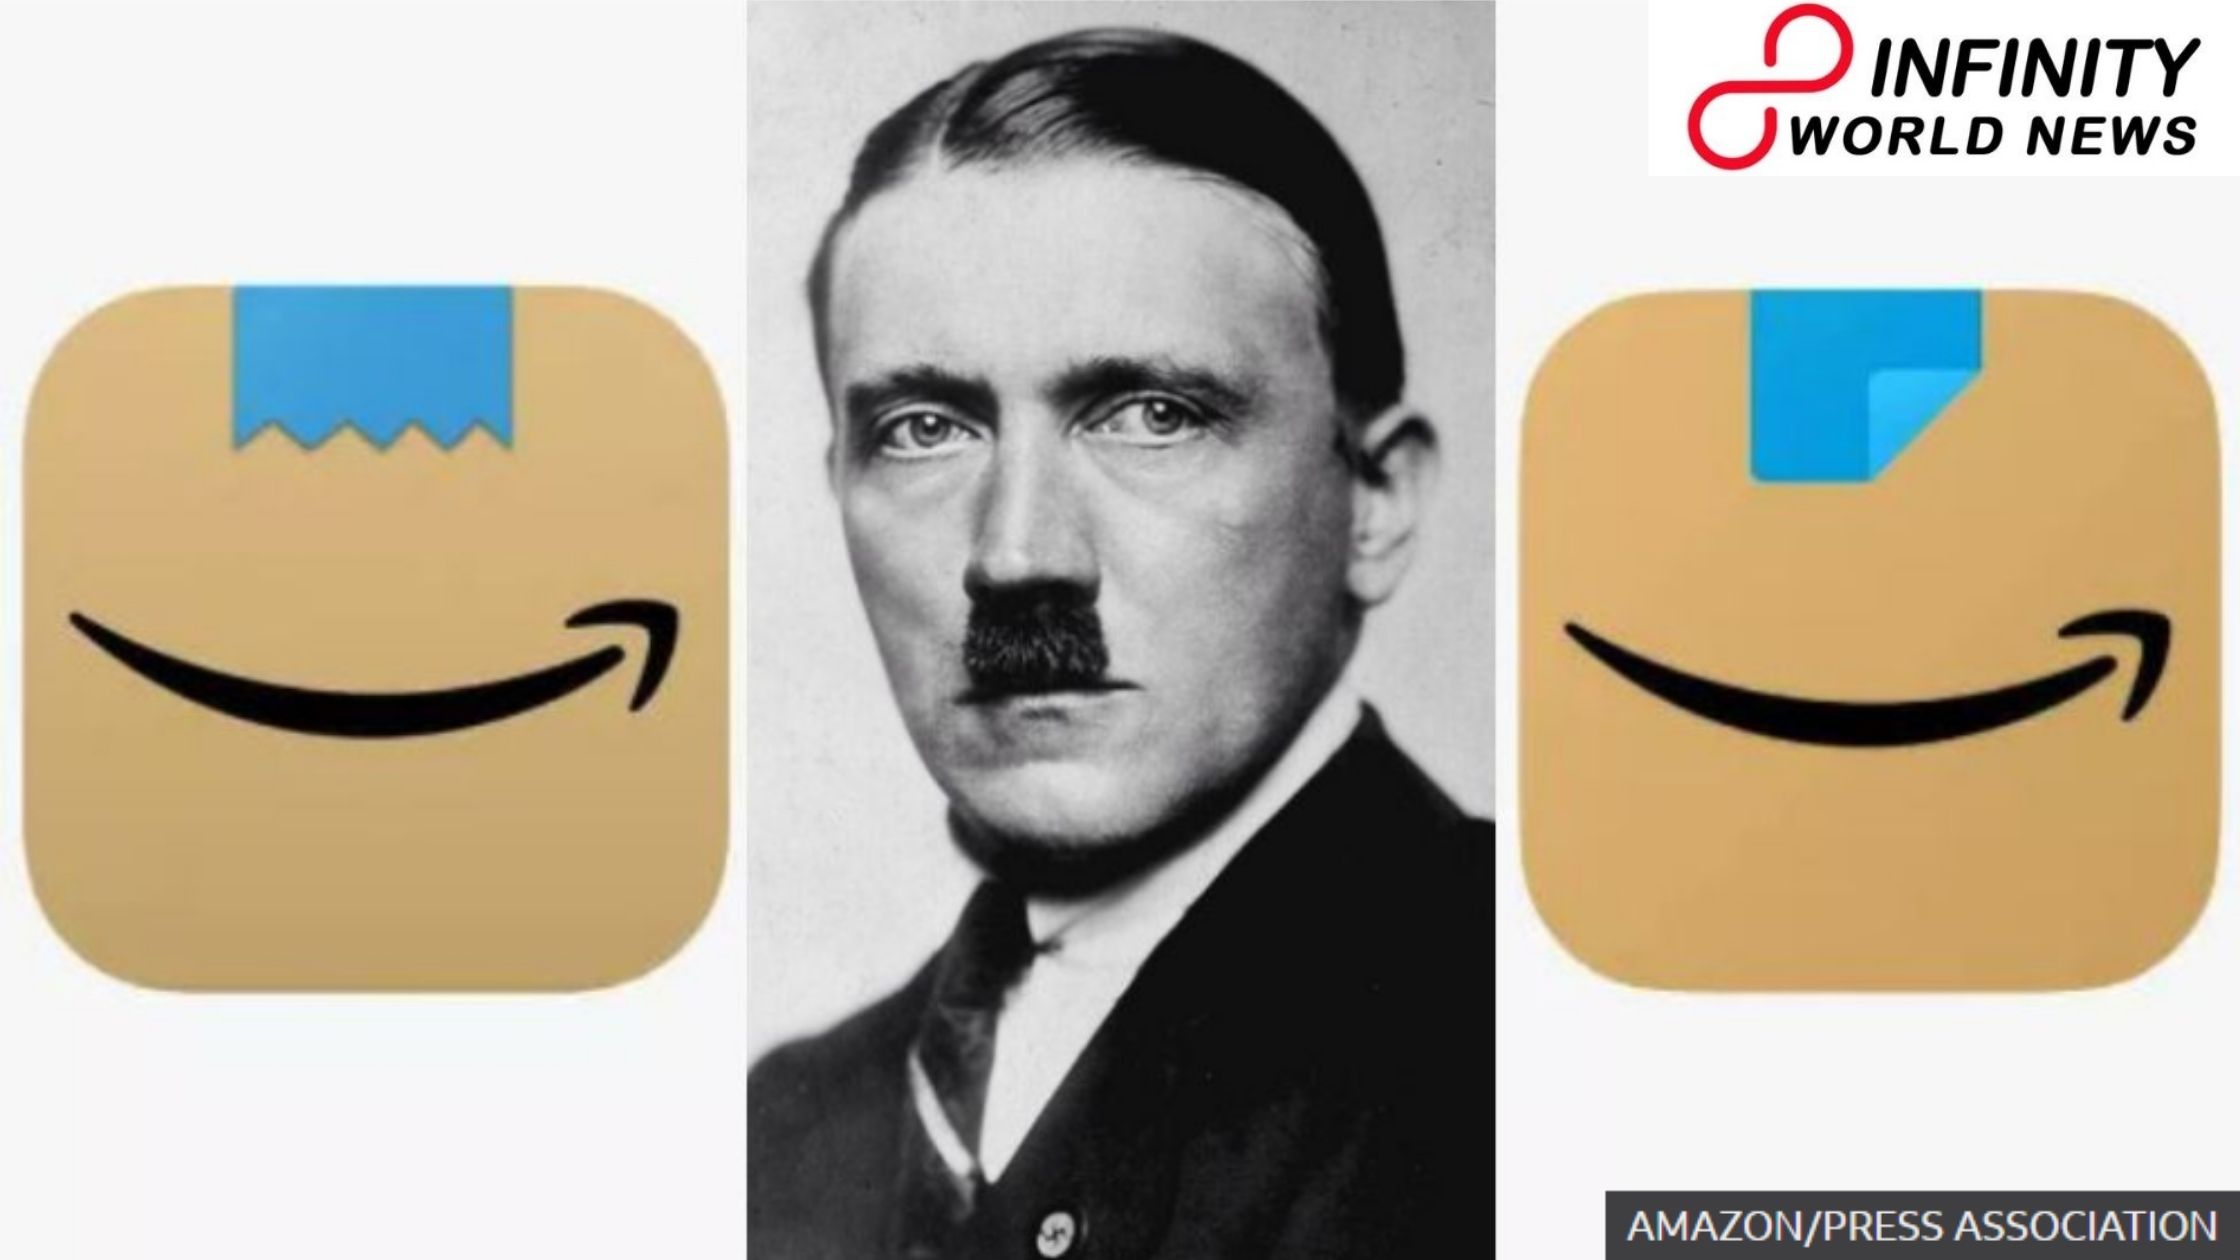 Amazon changes application logo that 'looks like Adolf Hitler'